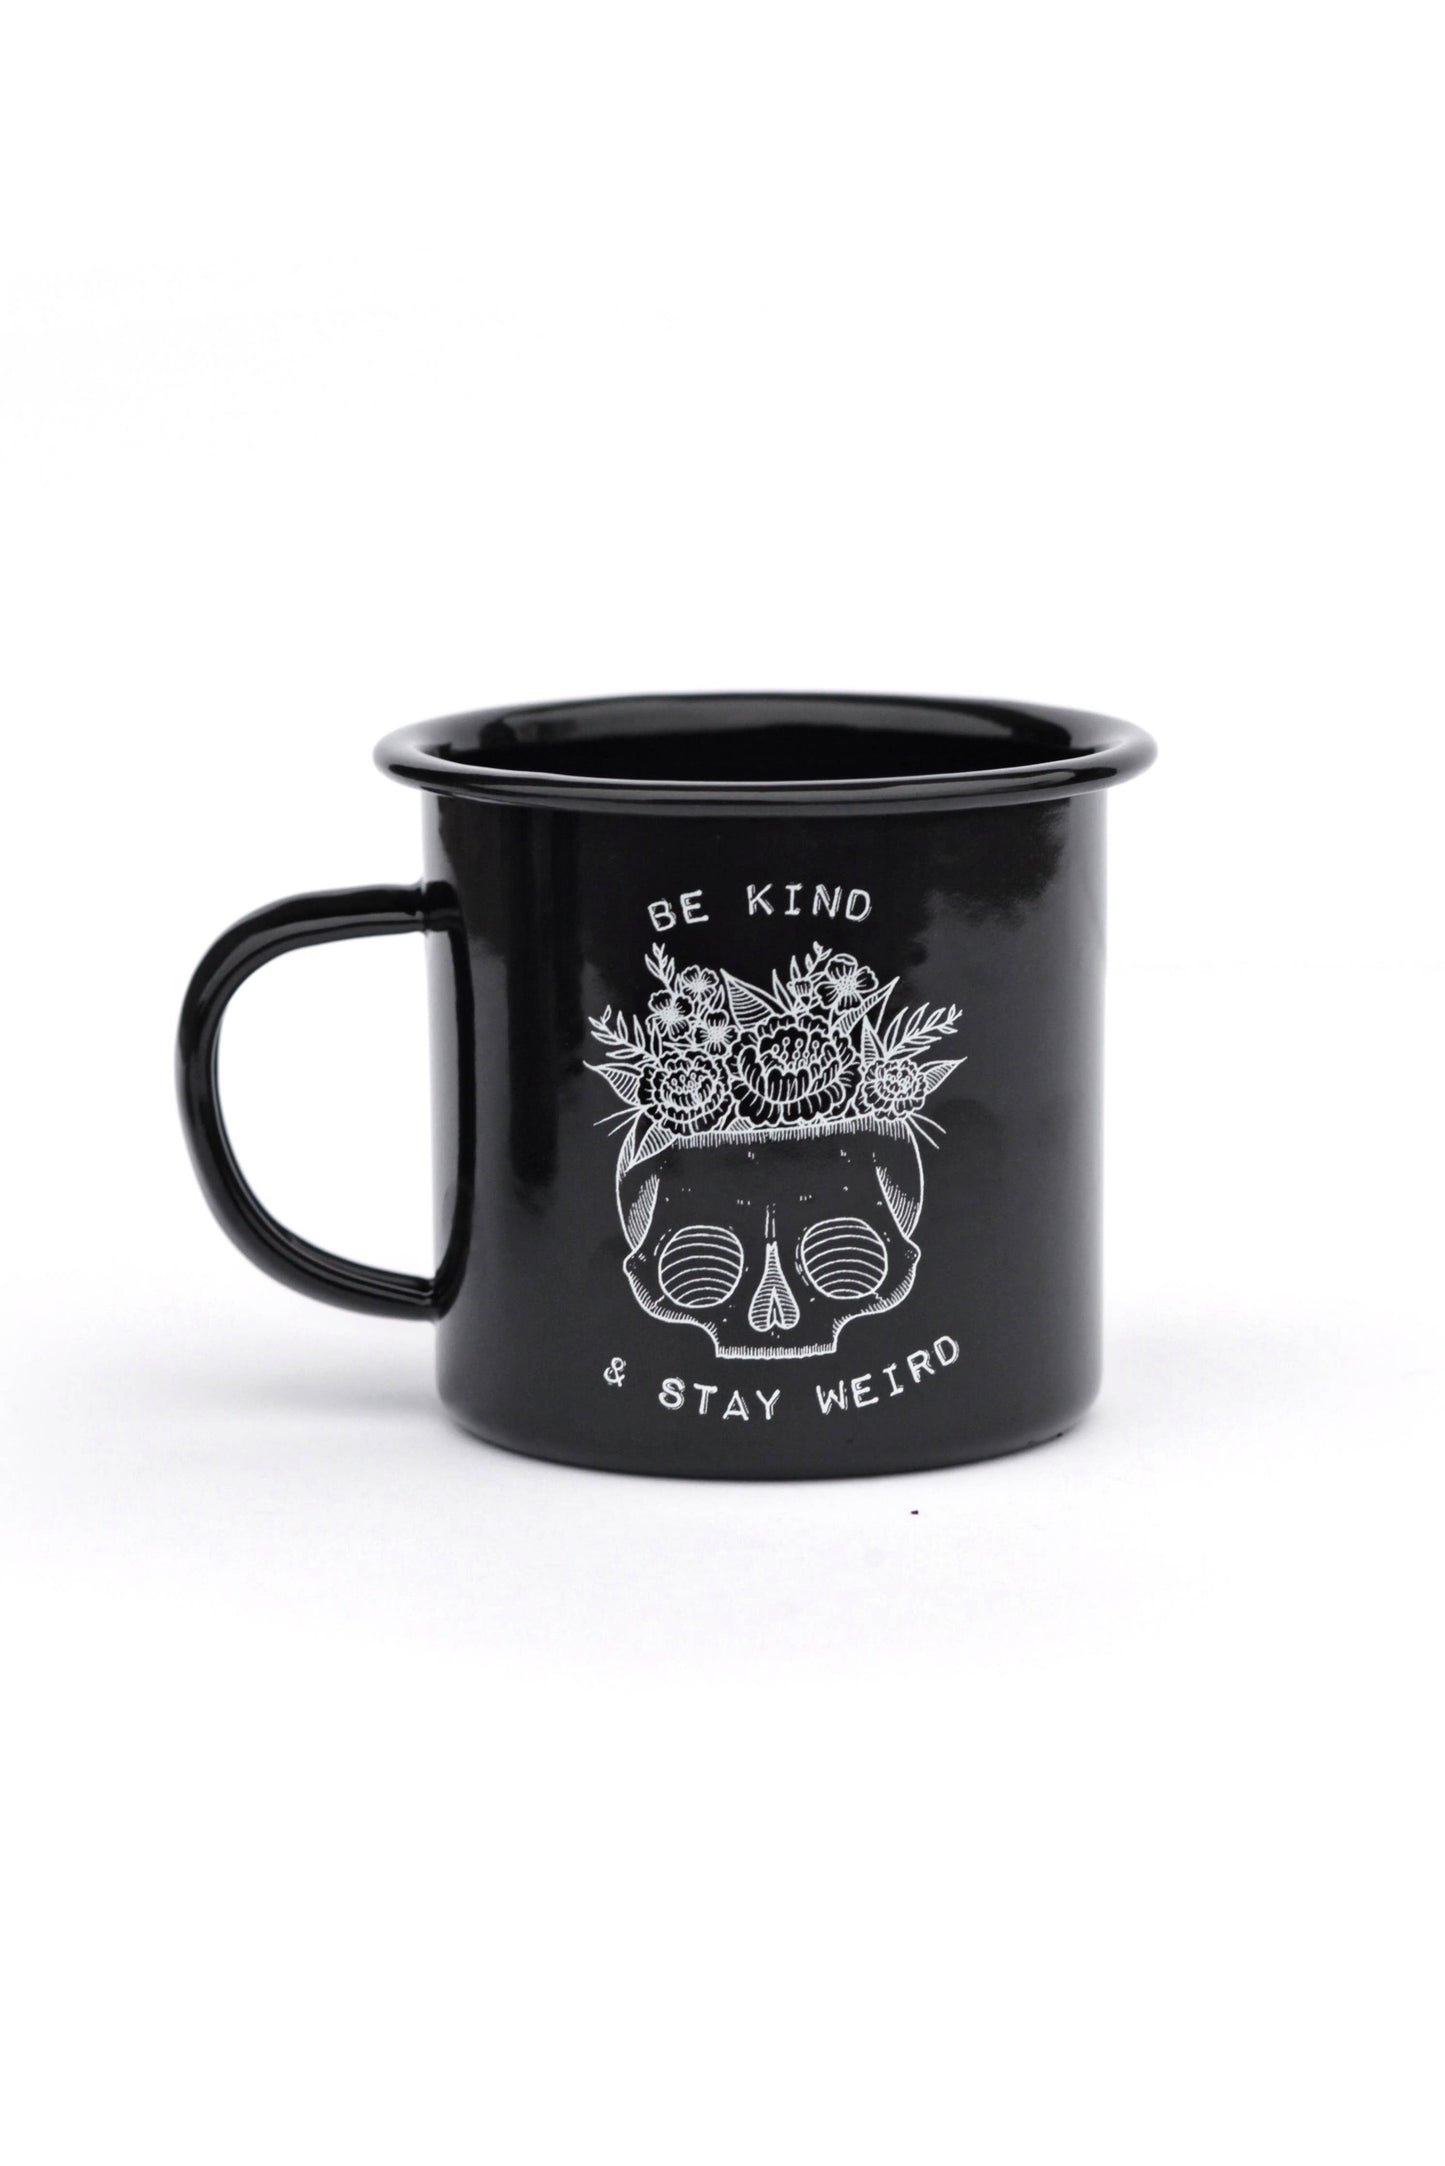 Be Kind & Stay Weird Mug, enamel campfire mug